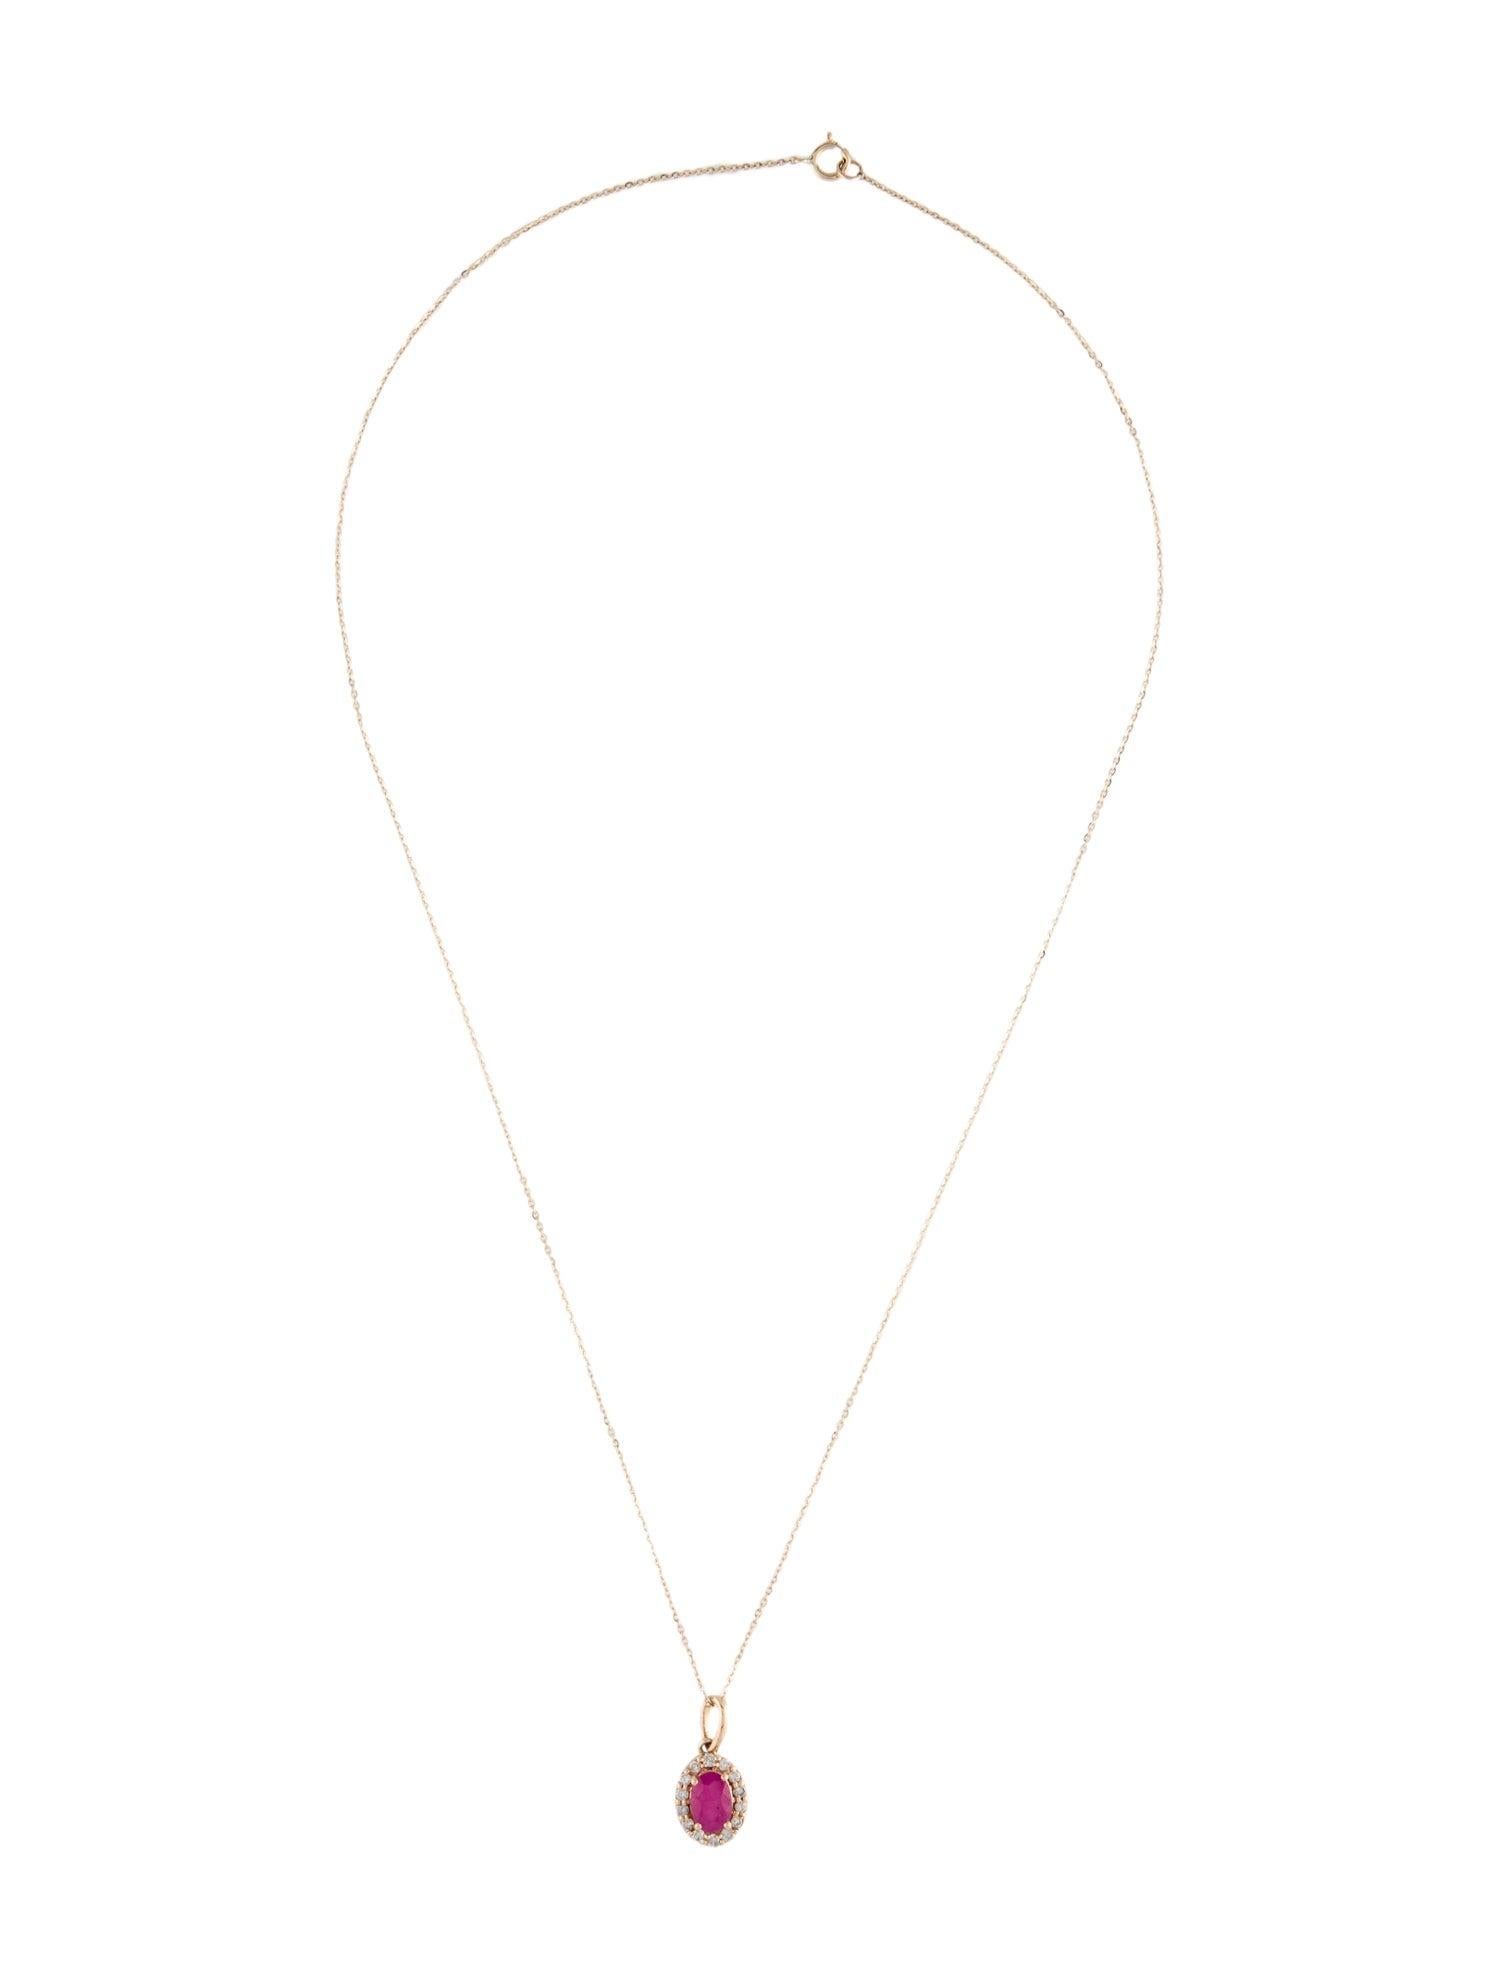 Women's 14K Ruby & Diamond Pendant Necklace - Stunning Gemstone Statement Piece For Sale